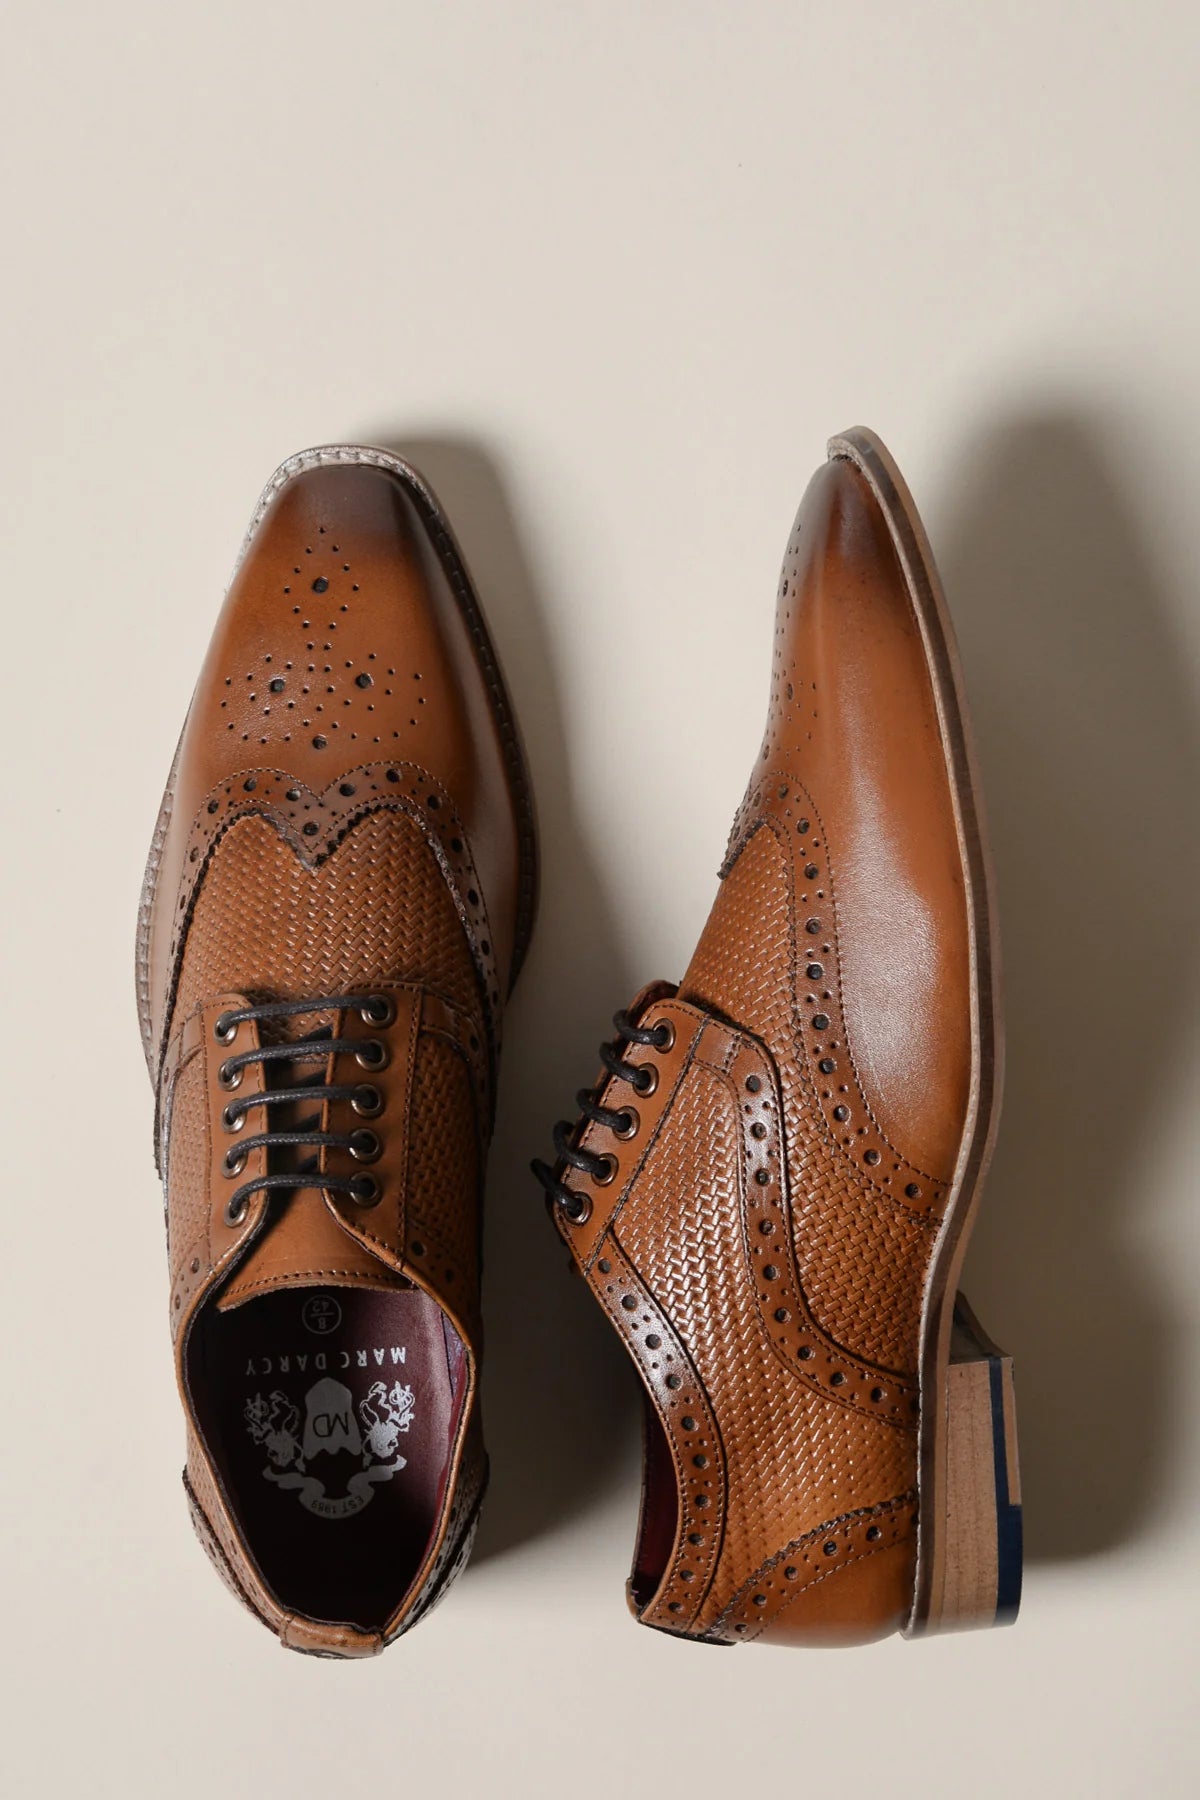 Brown leather shoes, Marc Darcy Brandon - Wingtip brogue